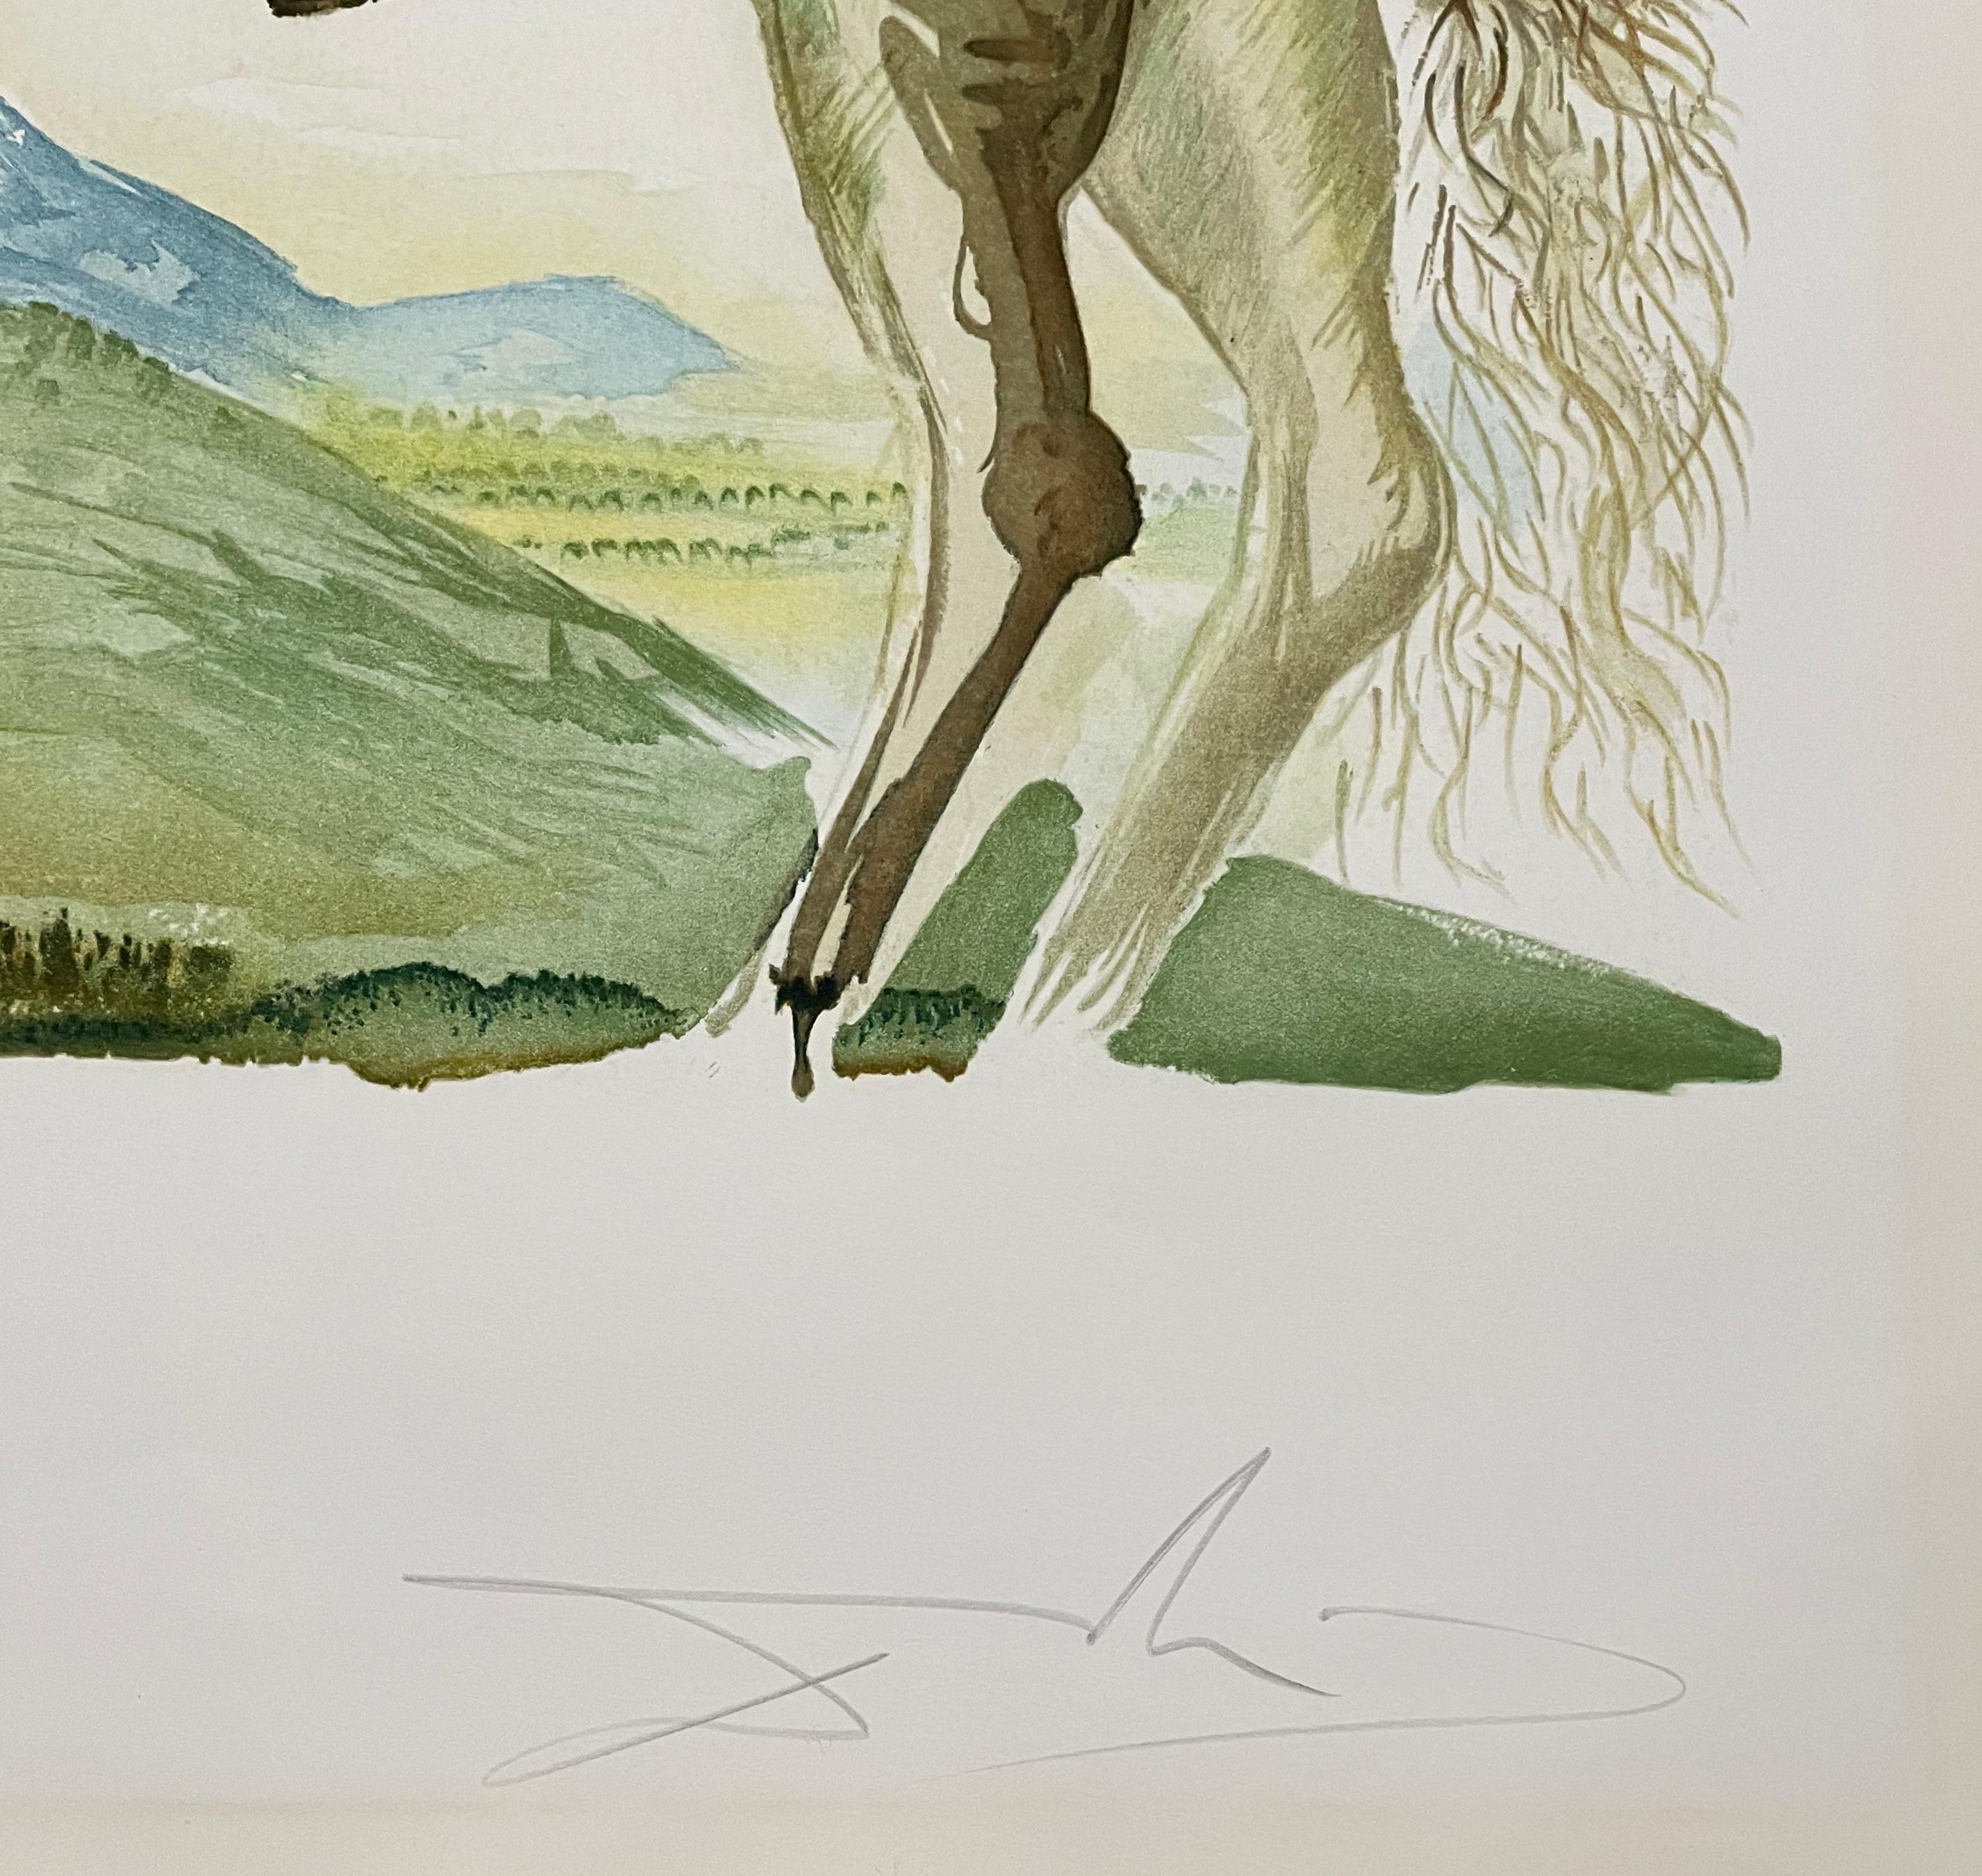 Caballero - Print by Salvador Dalí